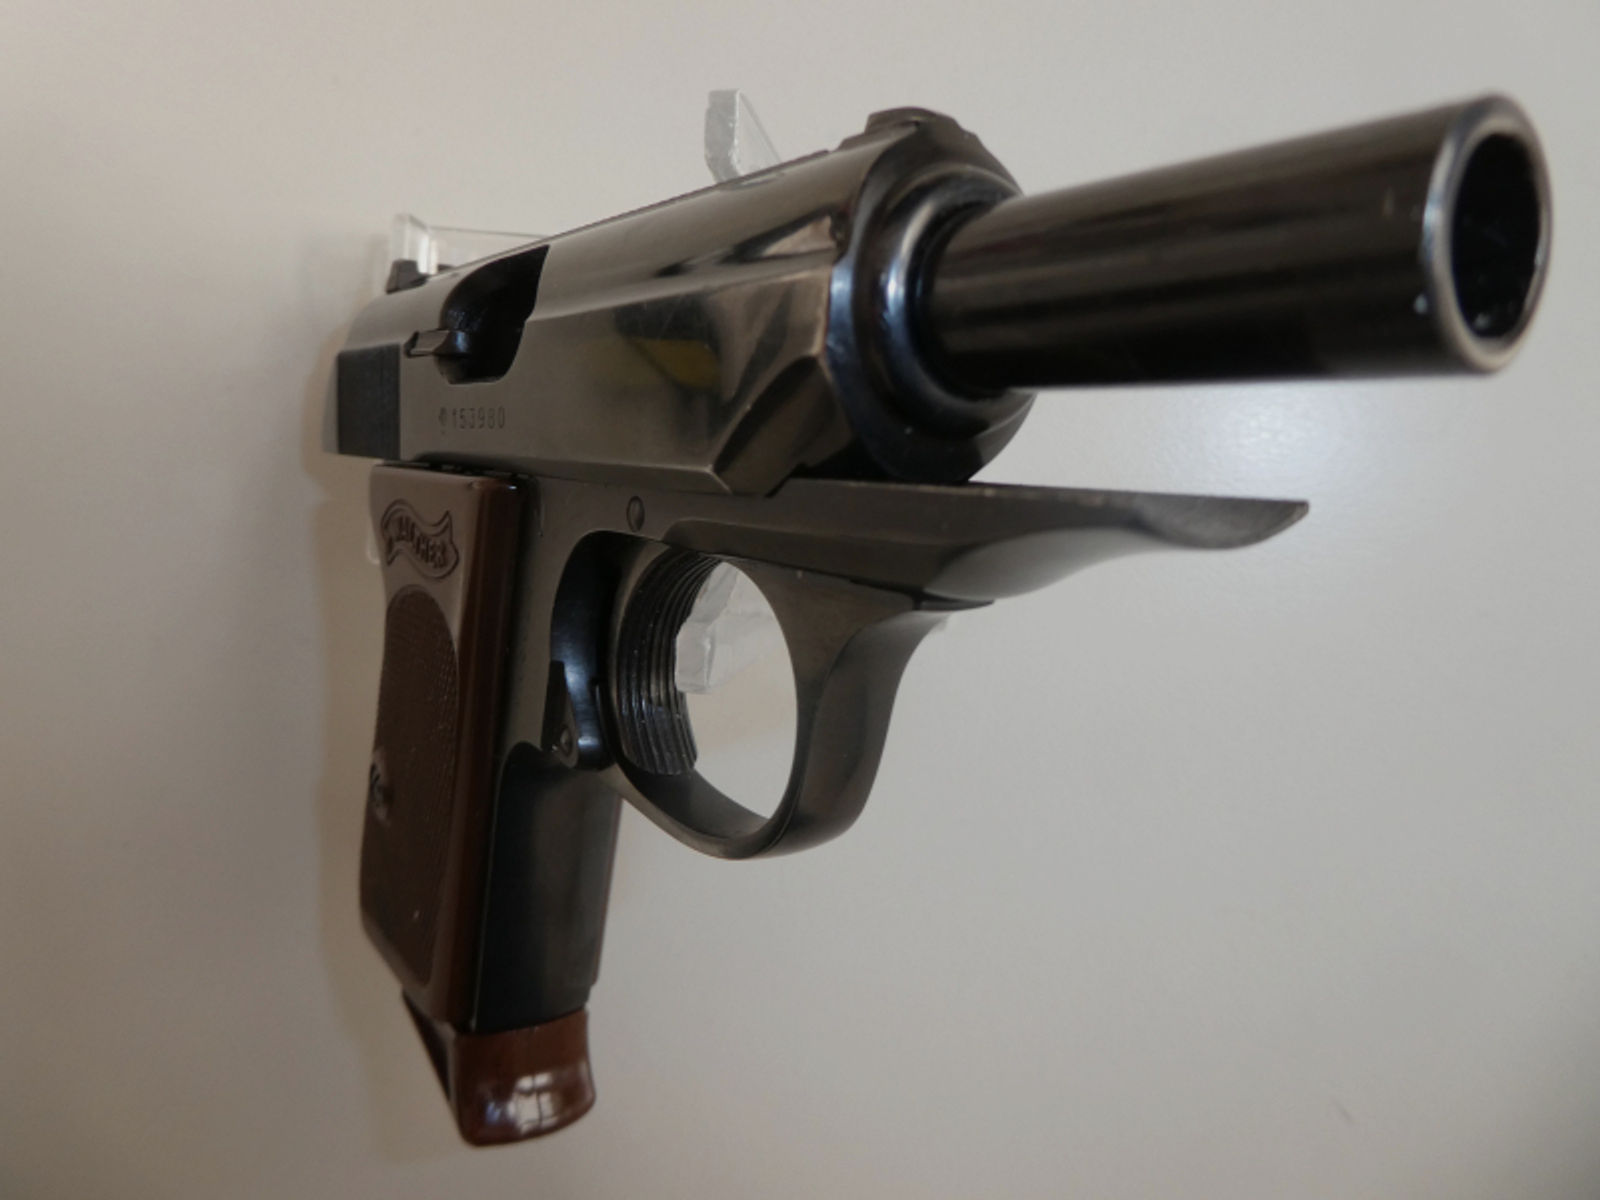 Pistole Walther - Modell PPK - Kaliber 9mmk - gepflegt - Zustand sehr gut -